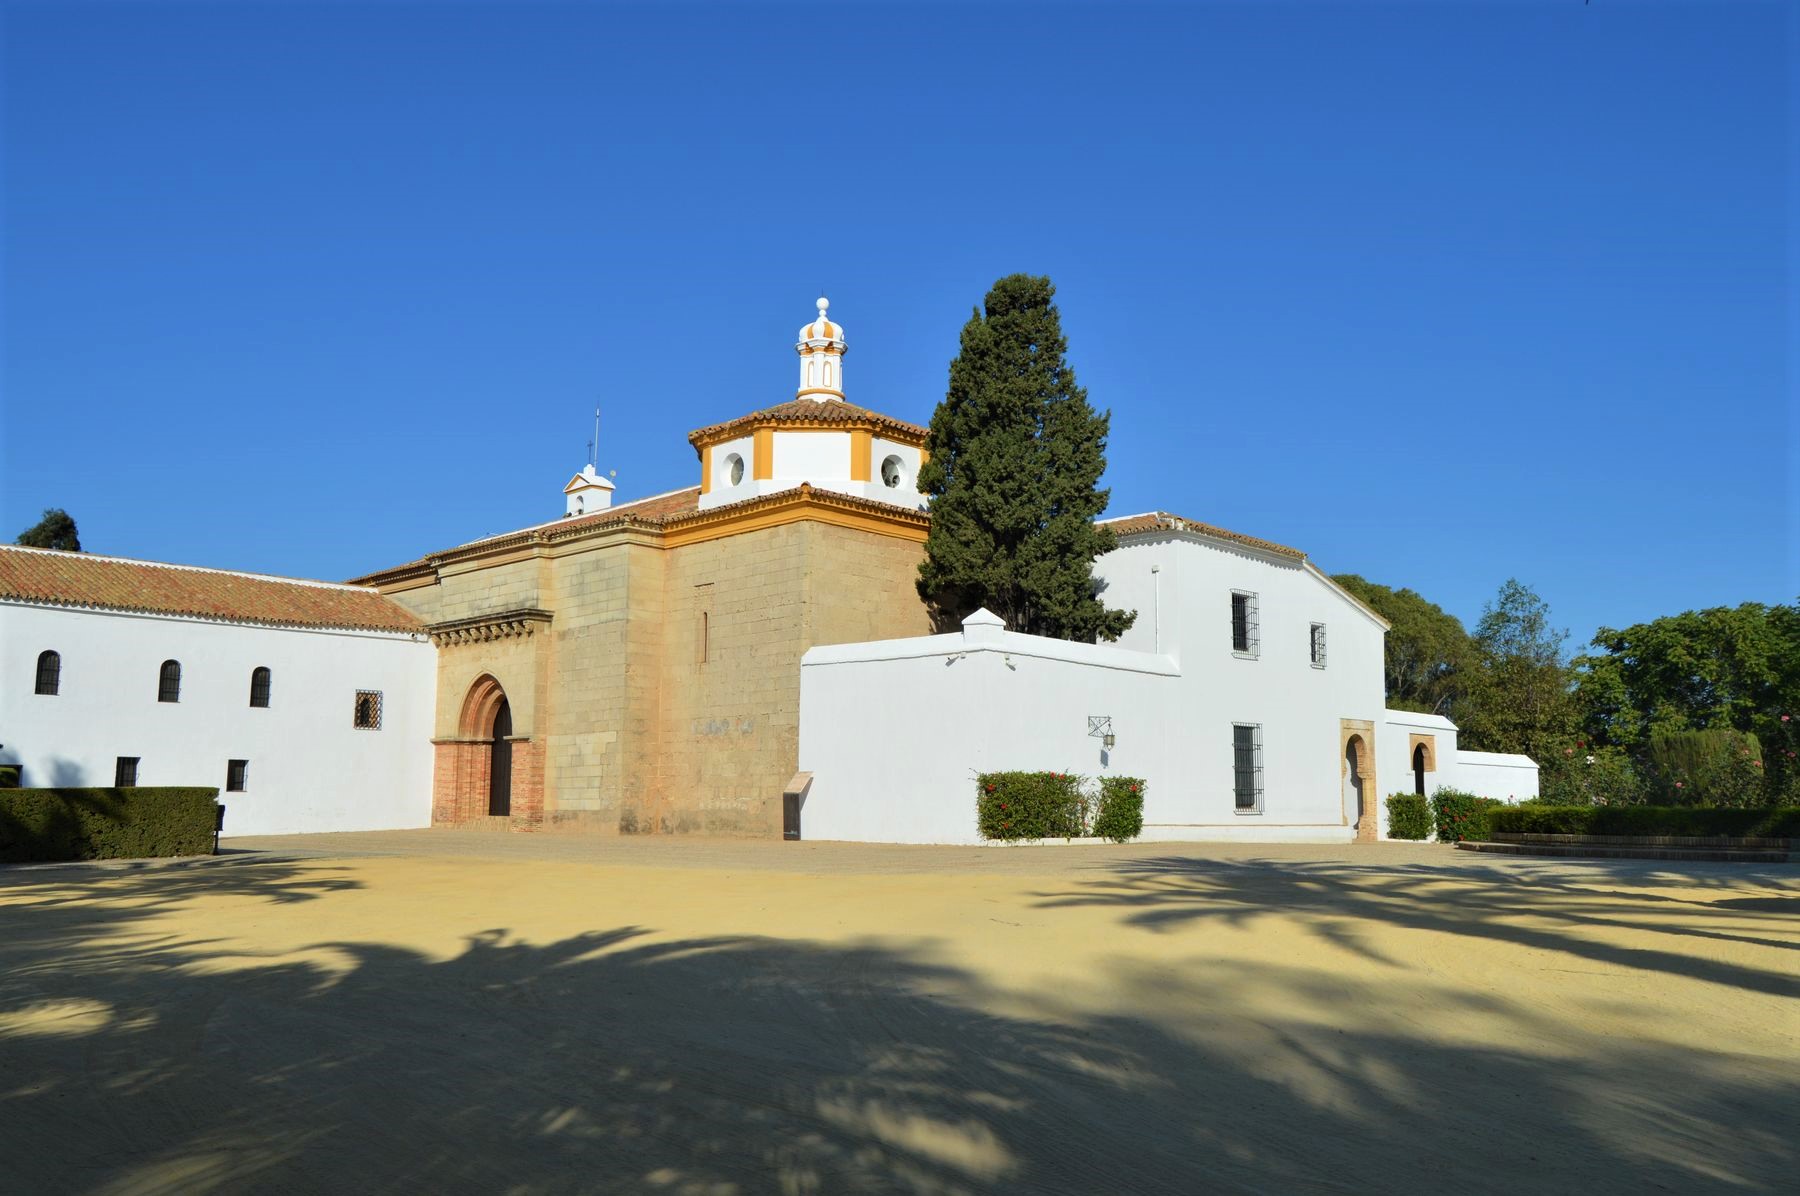 Ruta Huelva Colombina - Huelva Experiences